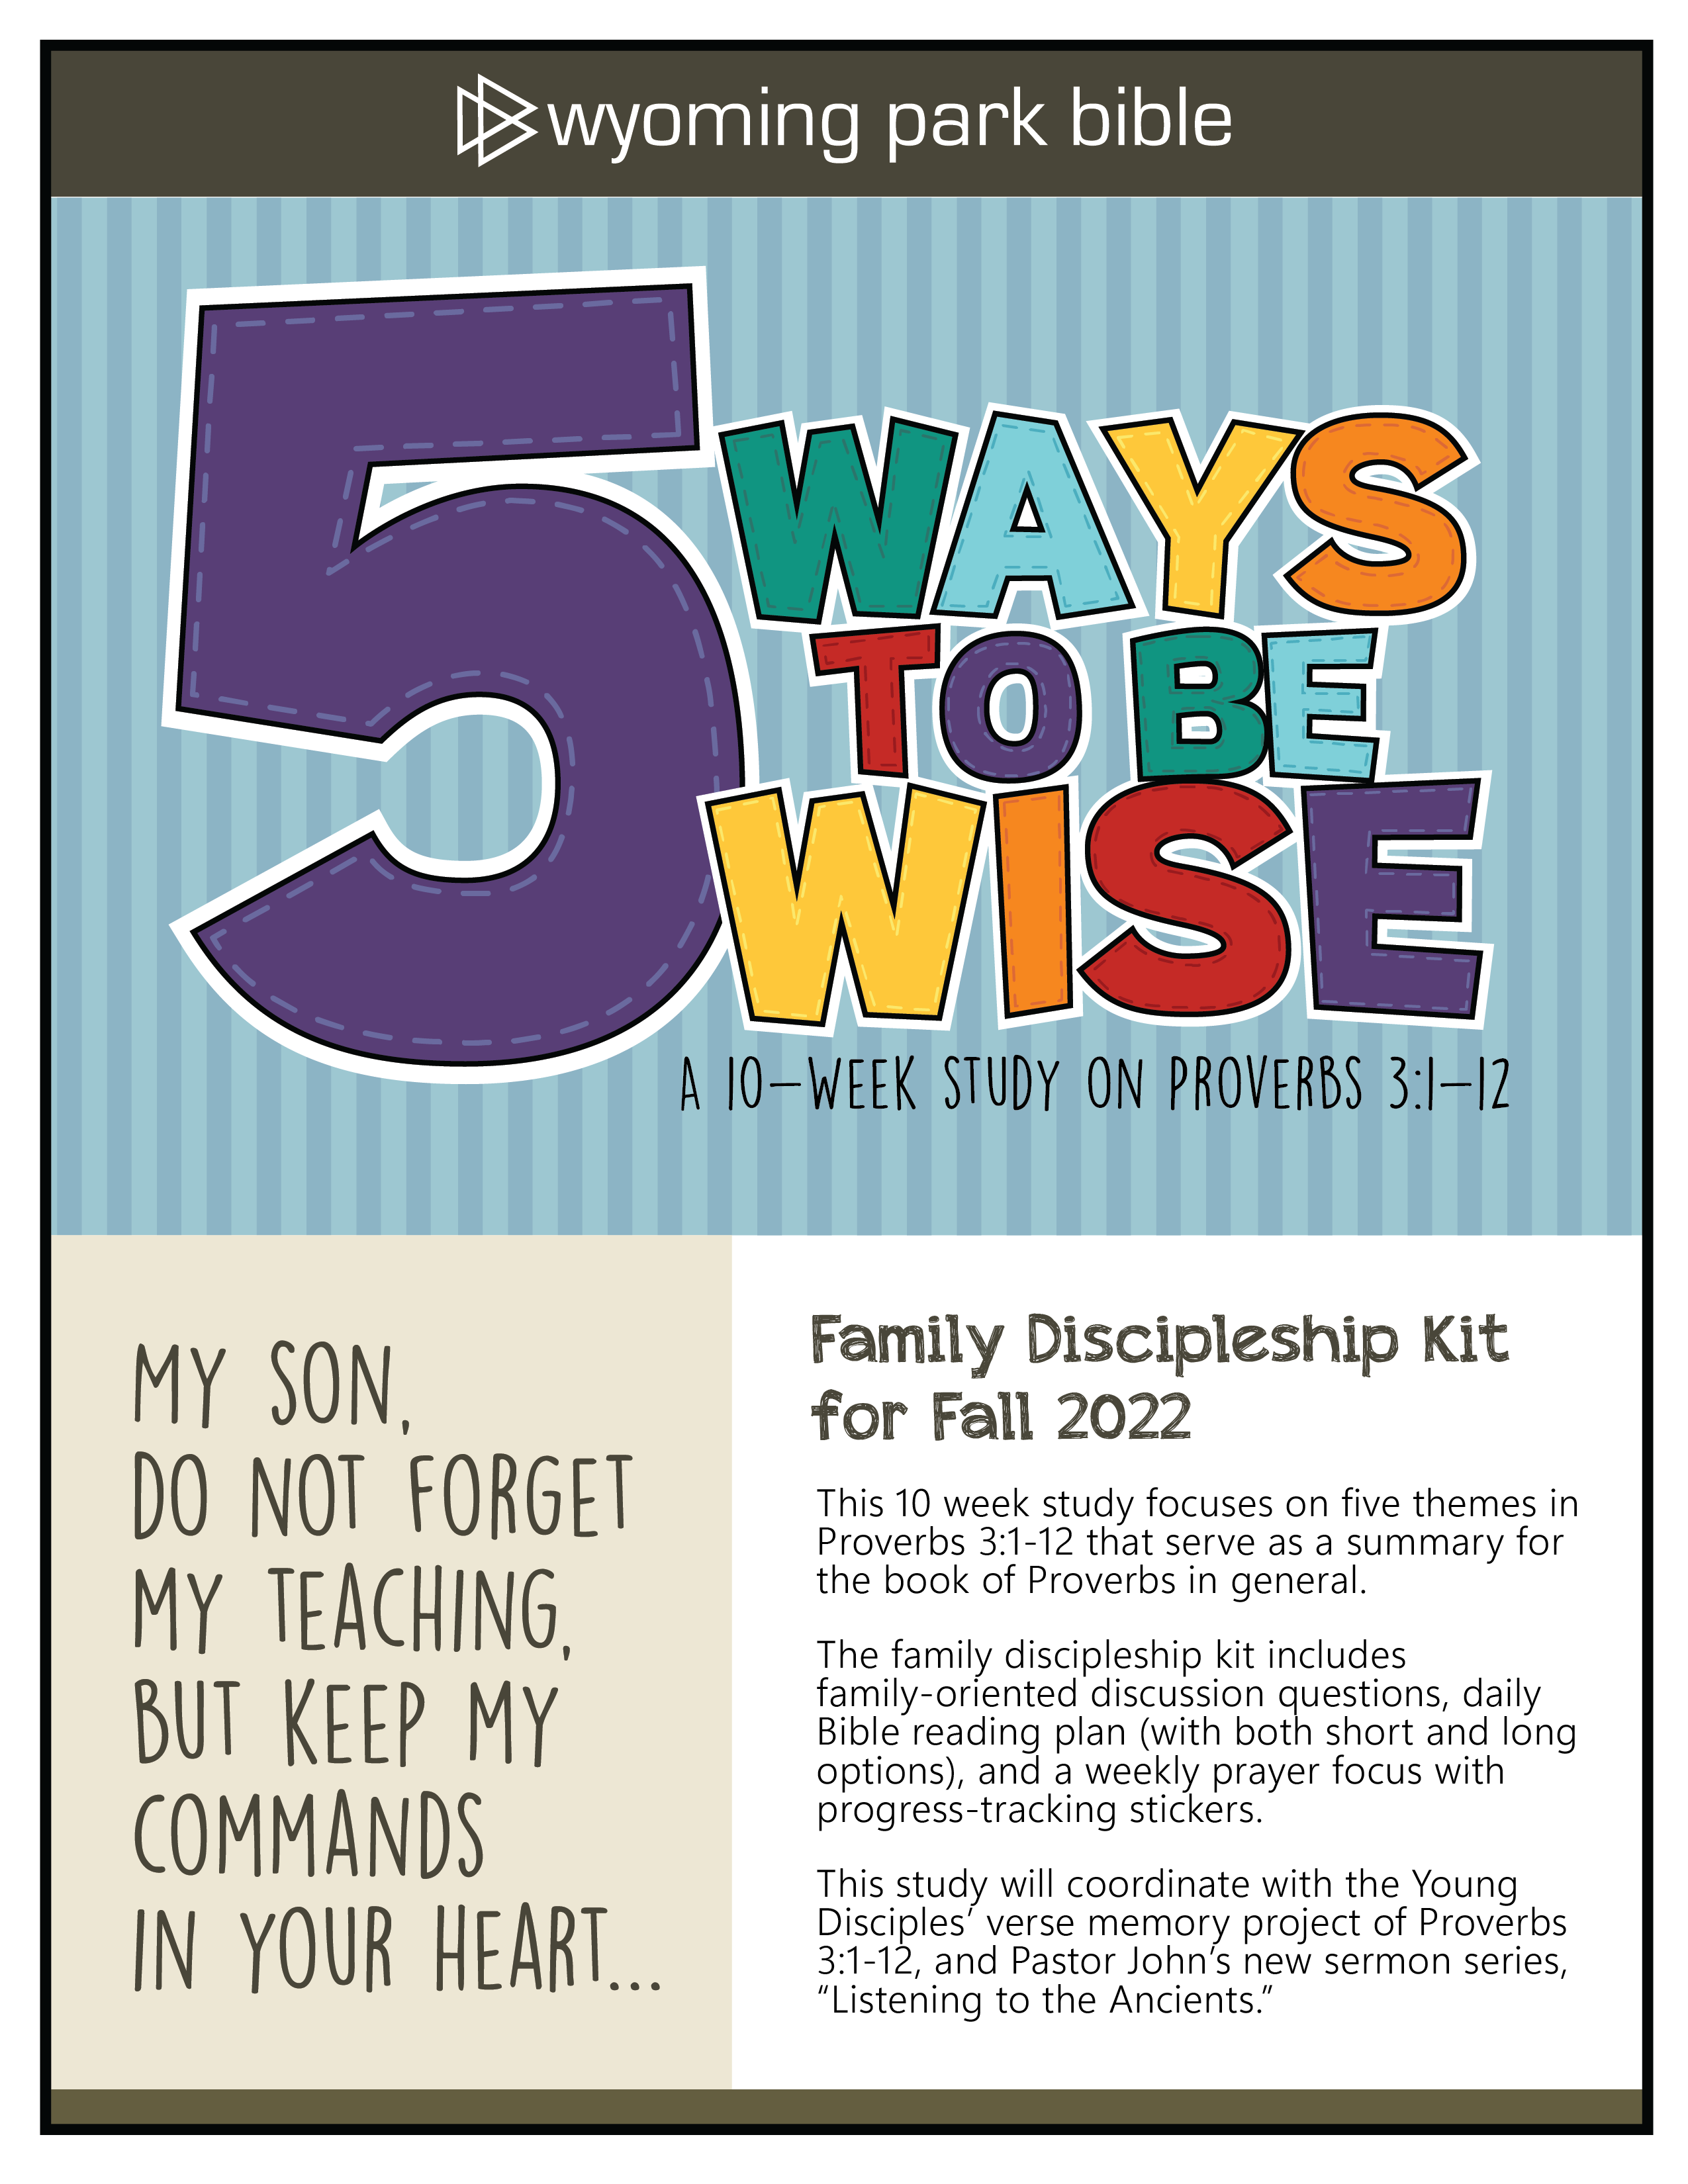 Fall 2022 Family Discipleship Kit Devotional